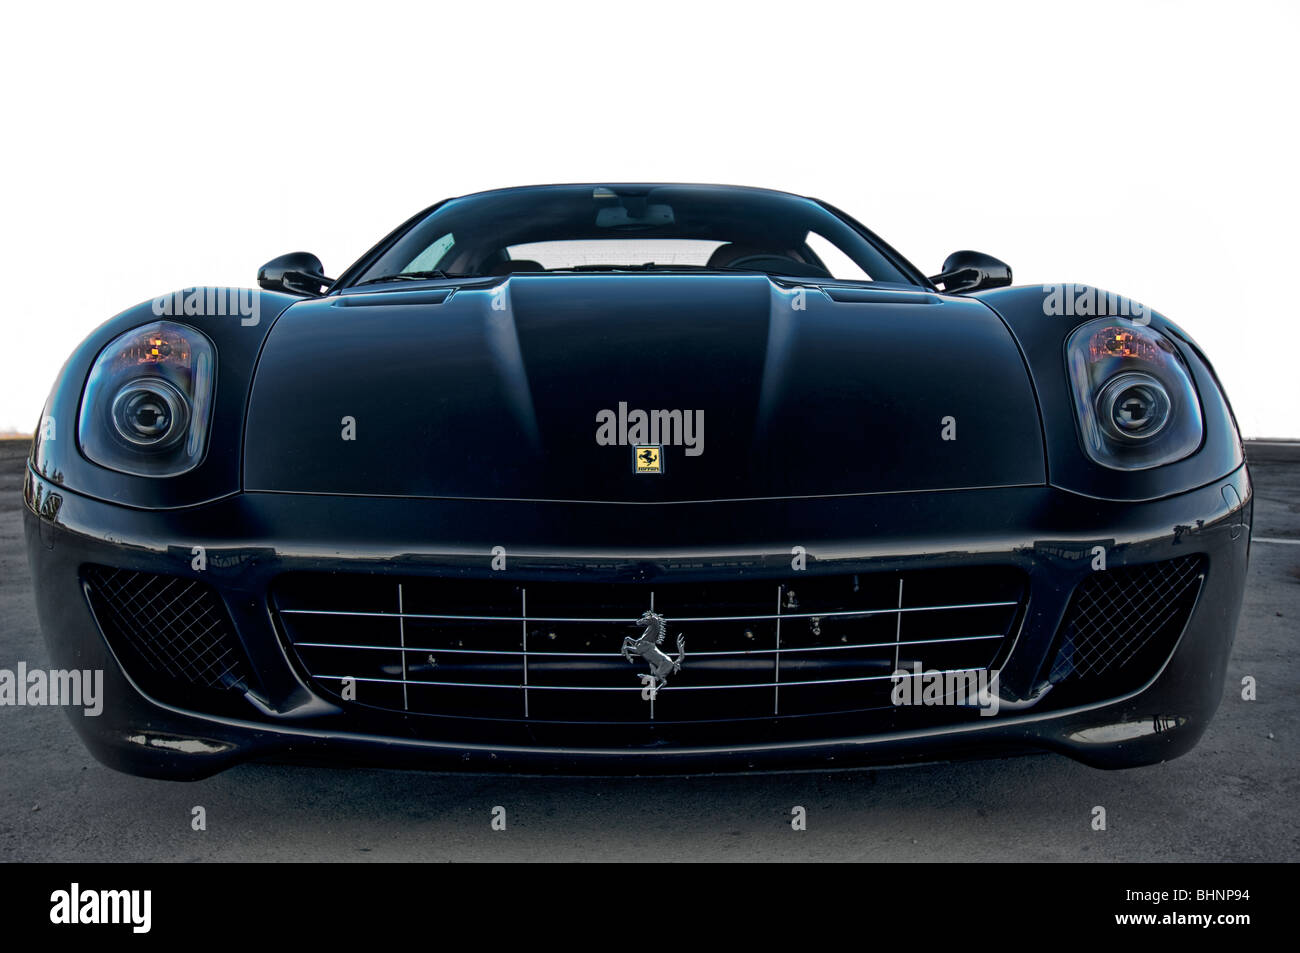 Ferrari Fiorano, luxury black car front view Stock Photo